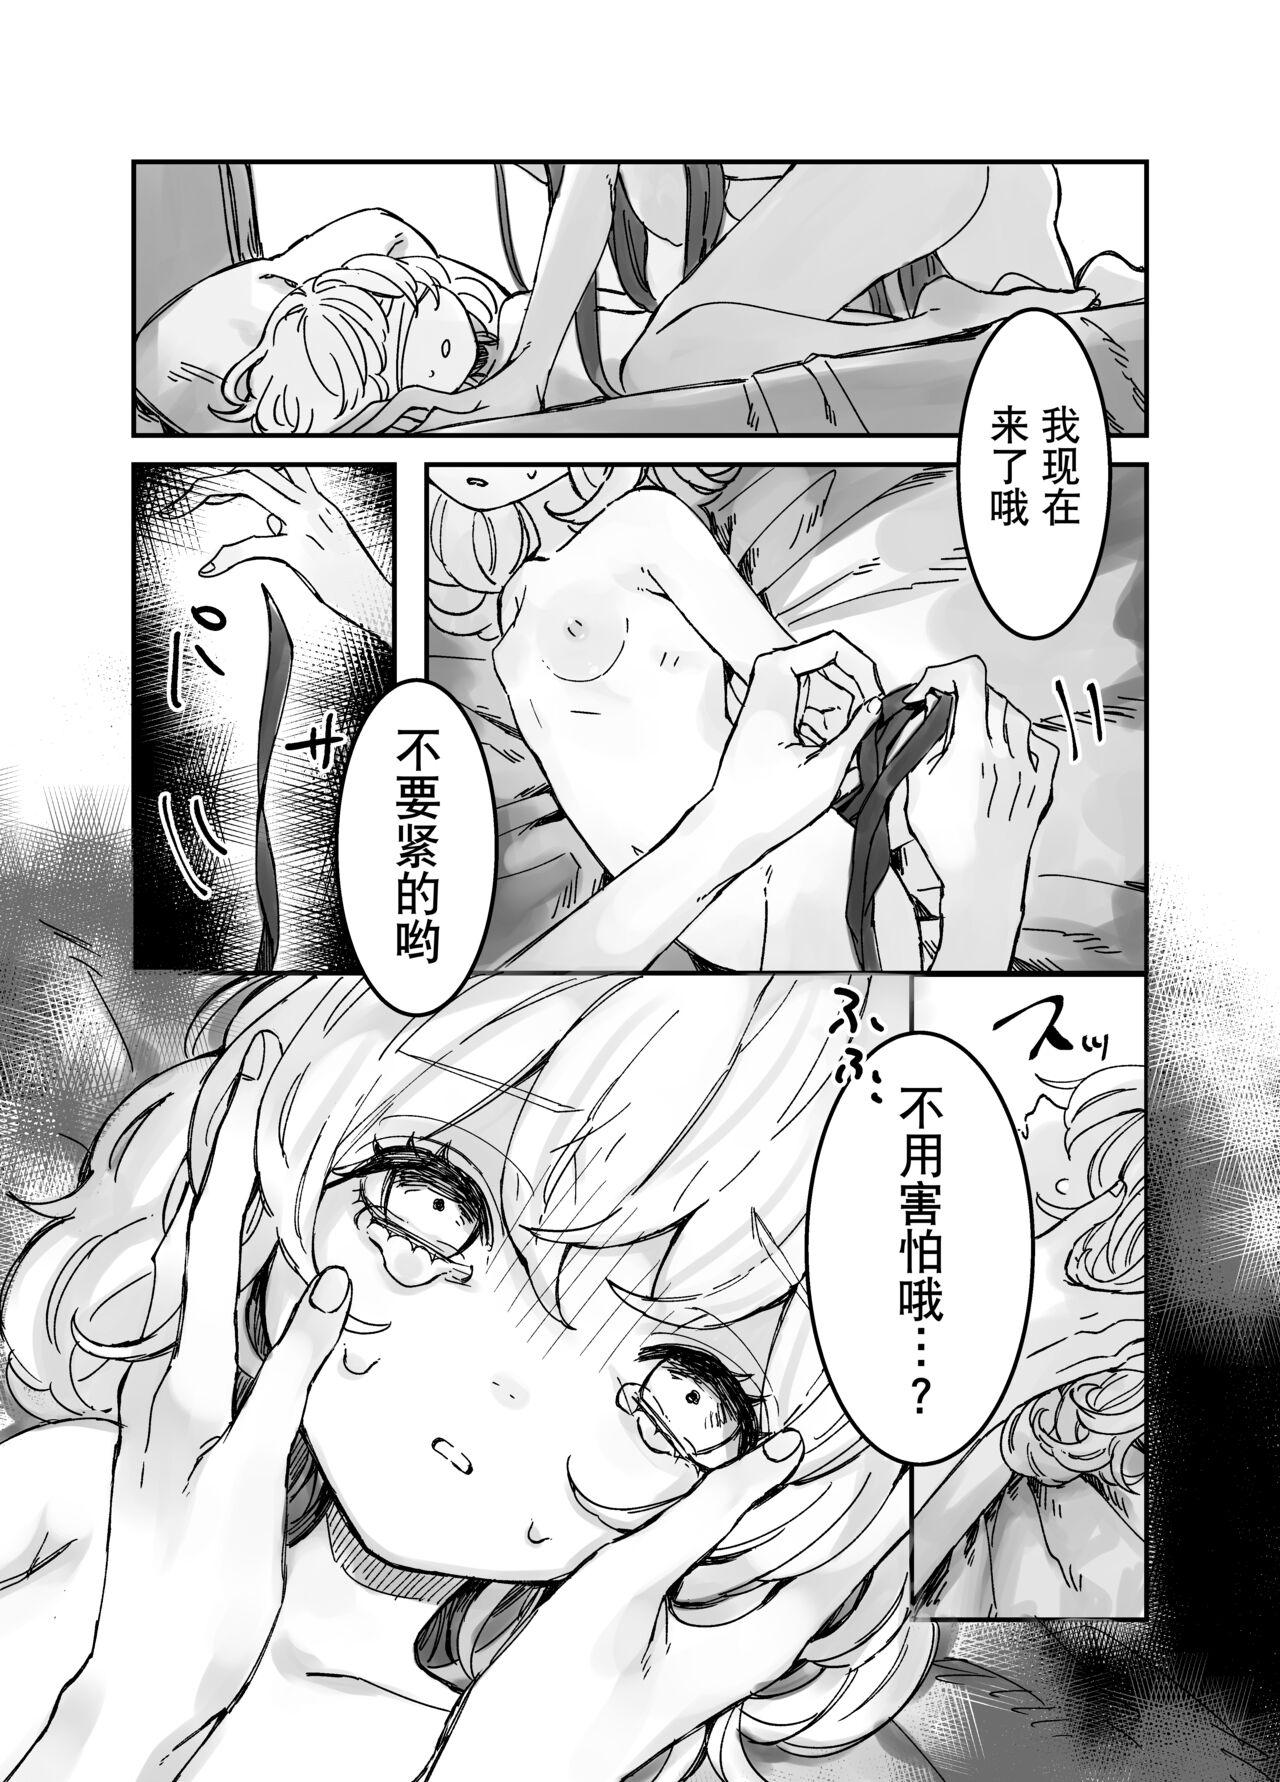 Nalgas Skeb Request Manga - Original Blows - Page 3